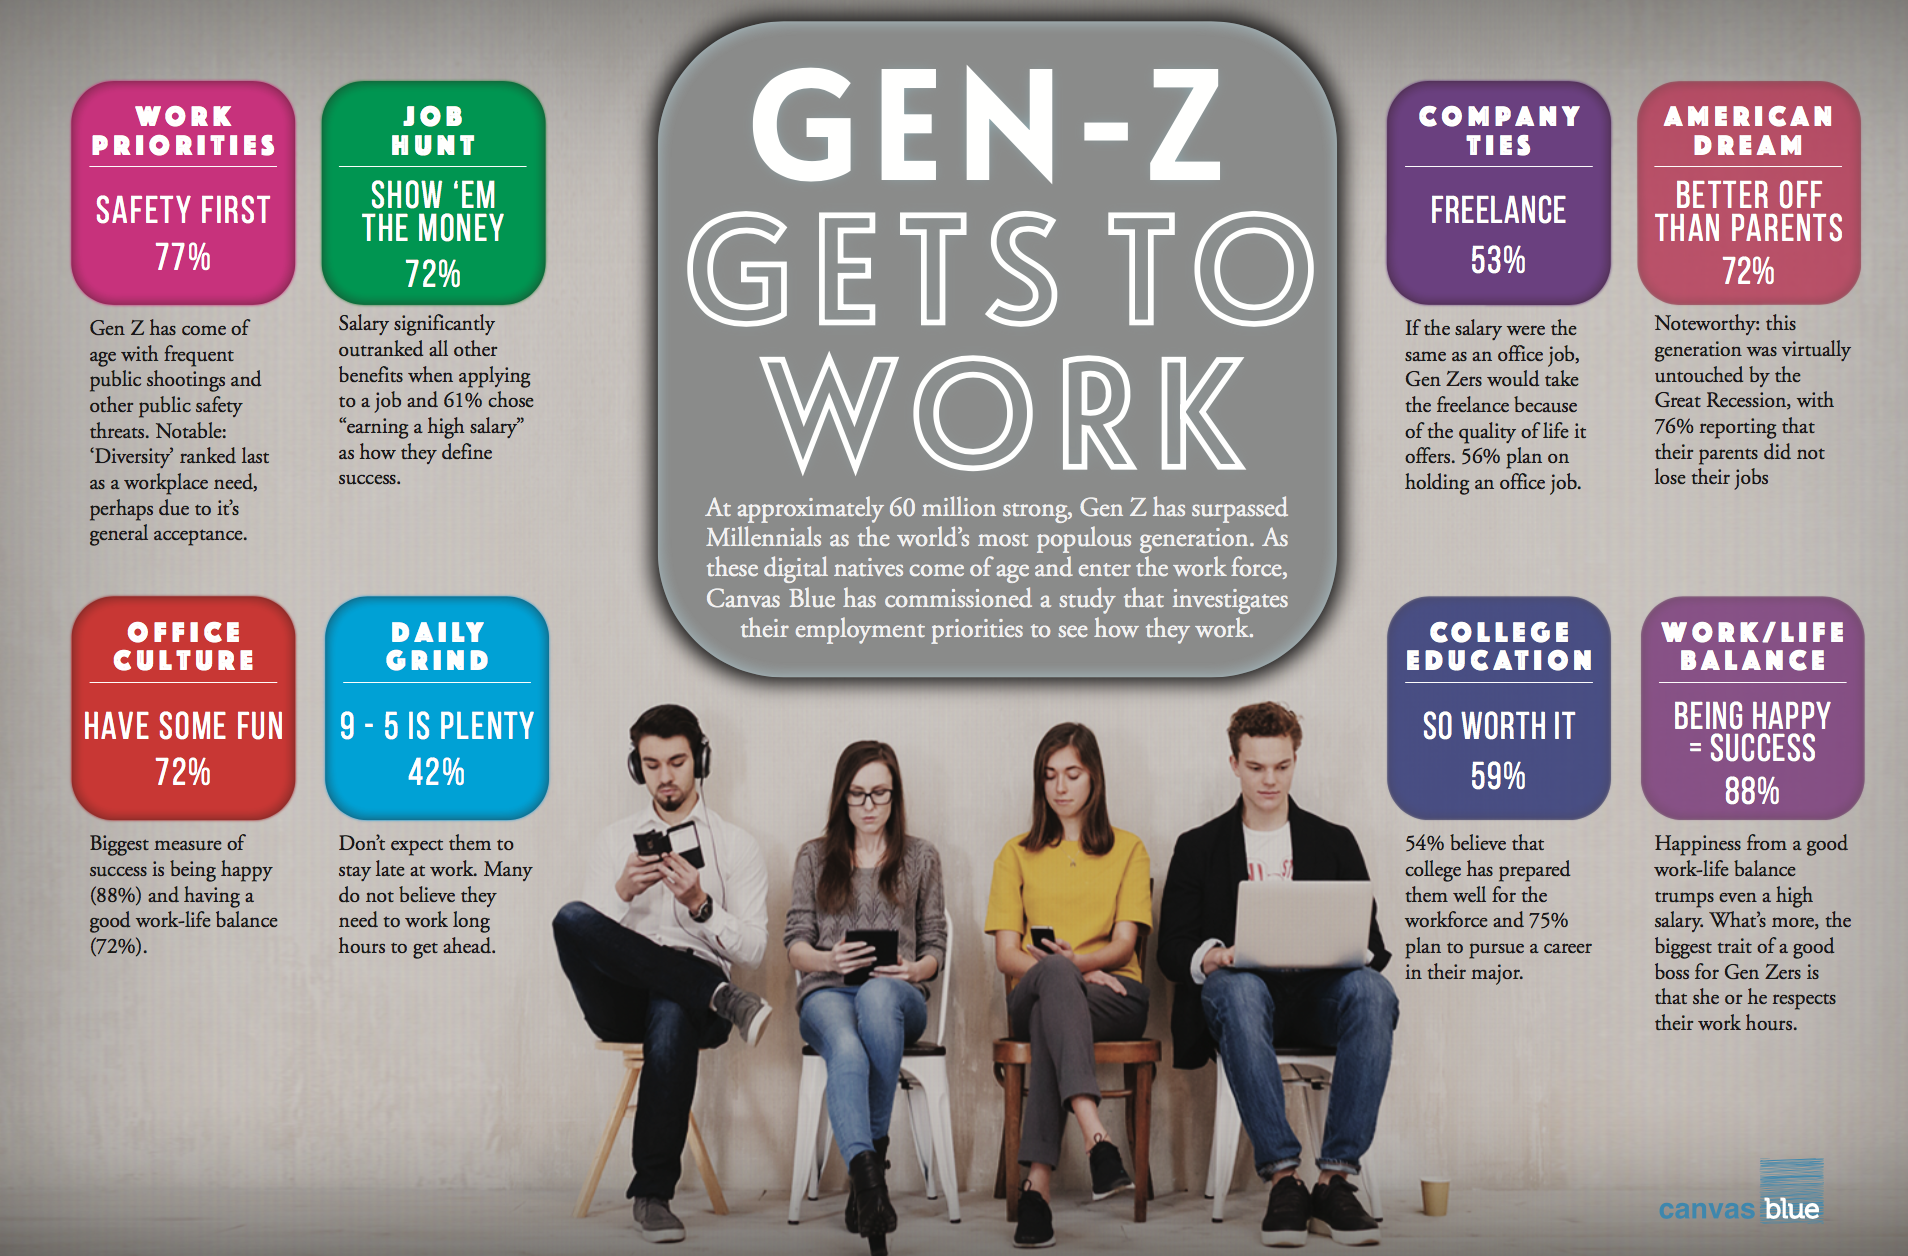 New Study, Gen Z Gets to Work, Sheds Light on Gen Z's Workforce Debut